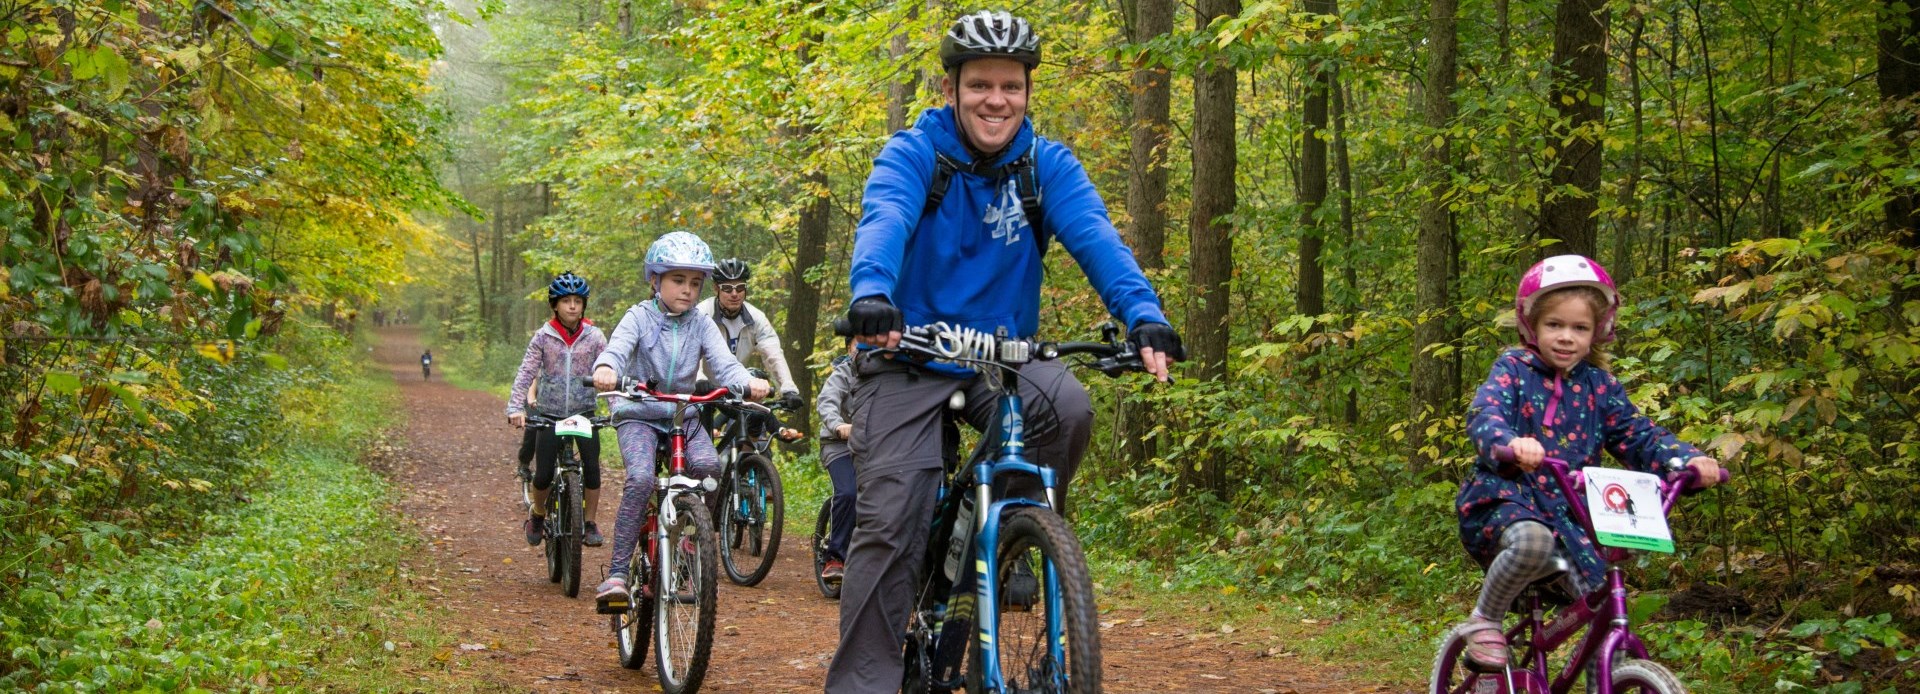 Durham Forest Mountain Biking family 